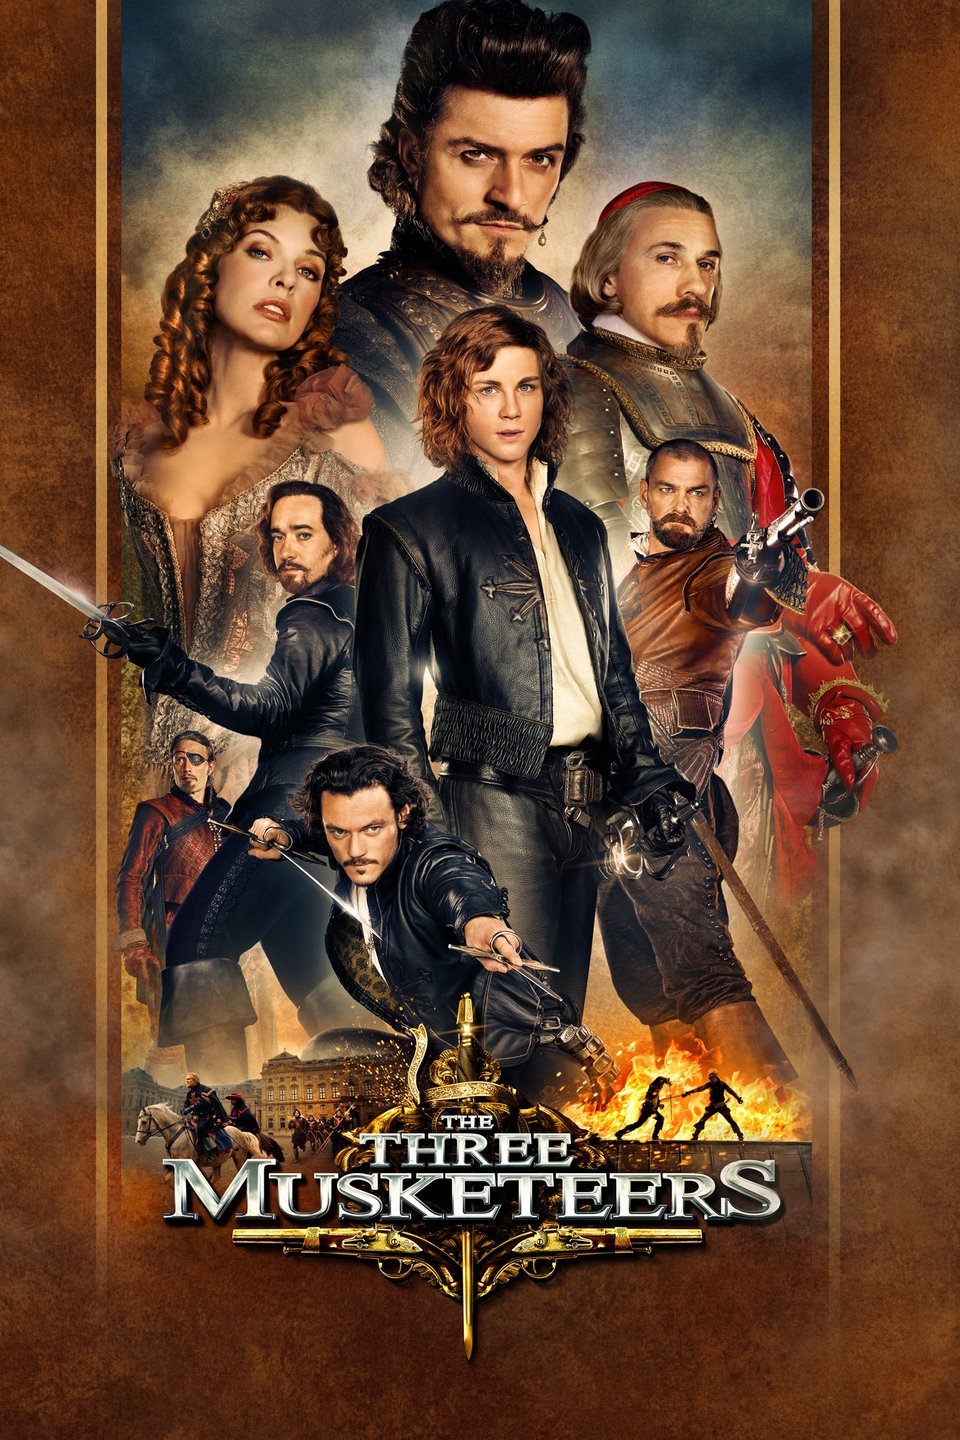 [MINI-HD] The Three Musketeers (2011) 3 ทหารเสือดาบทะลุจอ [1080p] [พากย์ไทย DTS + เสียงอังกฤษ DTS] [บรรยายไทย + อังกฤษ] [เสียงไทย + ซับไทย] [OPENLOAD]